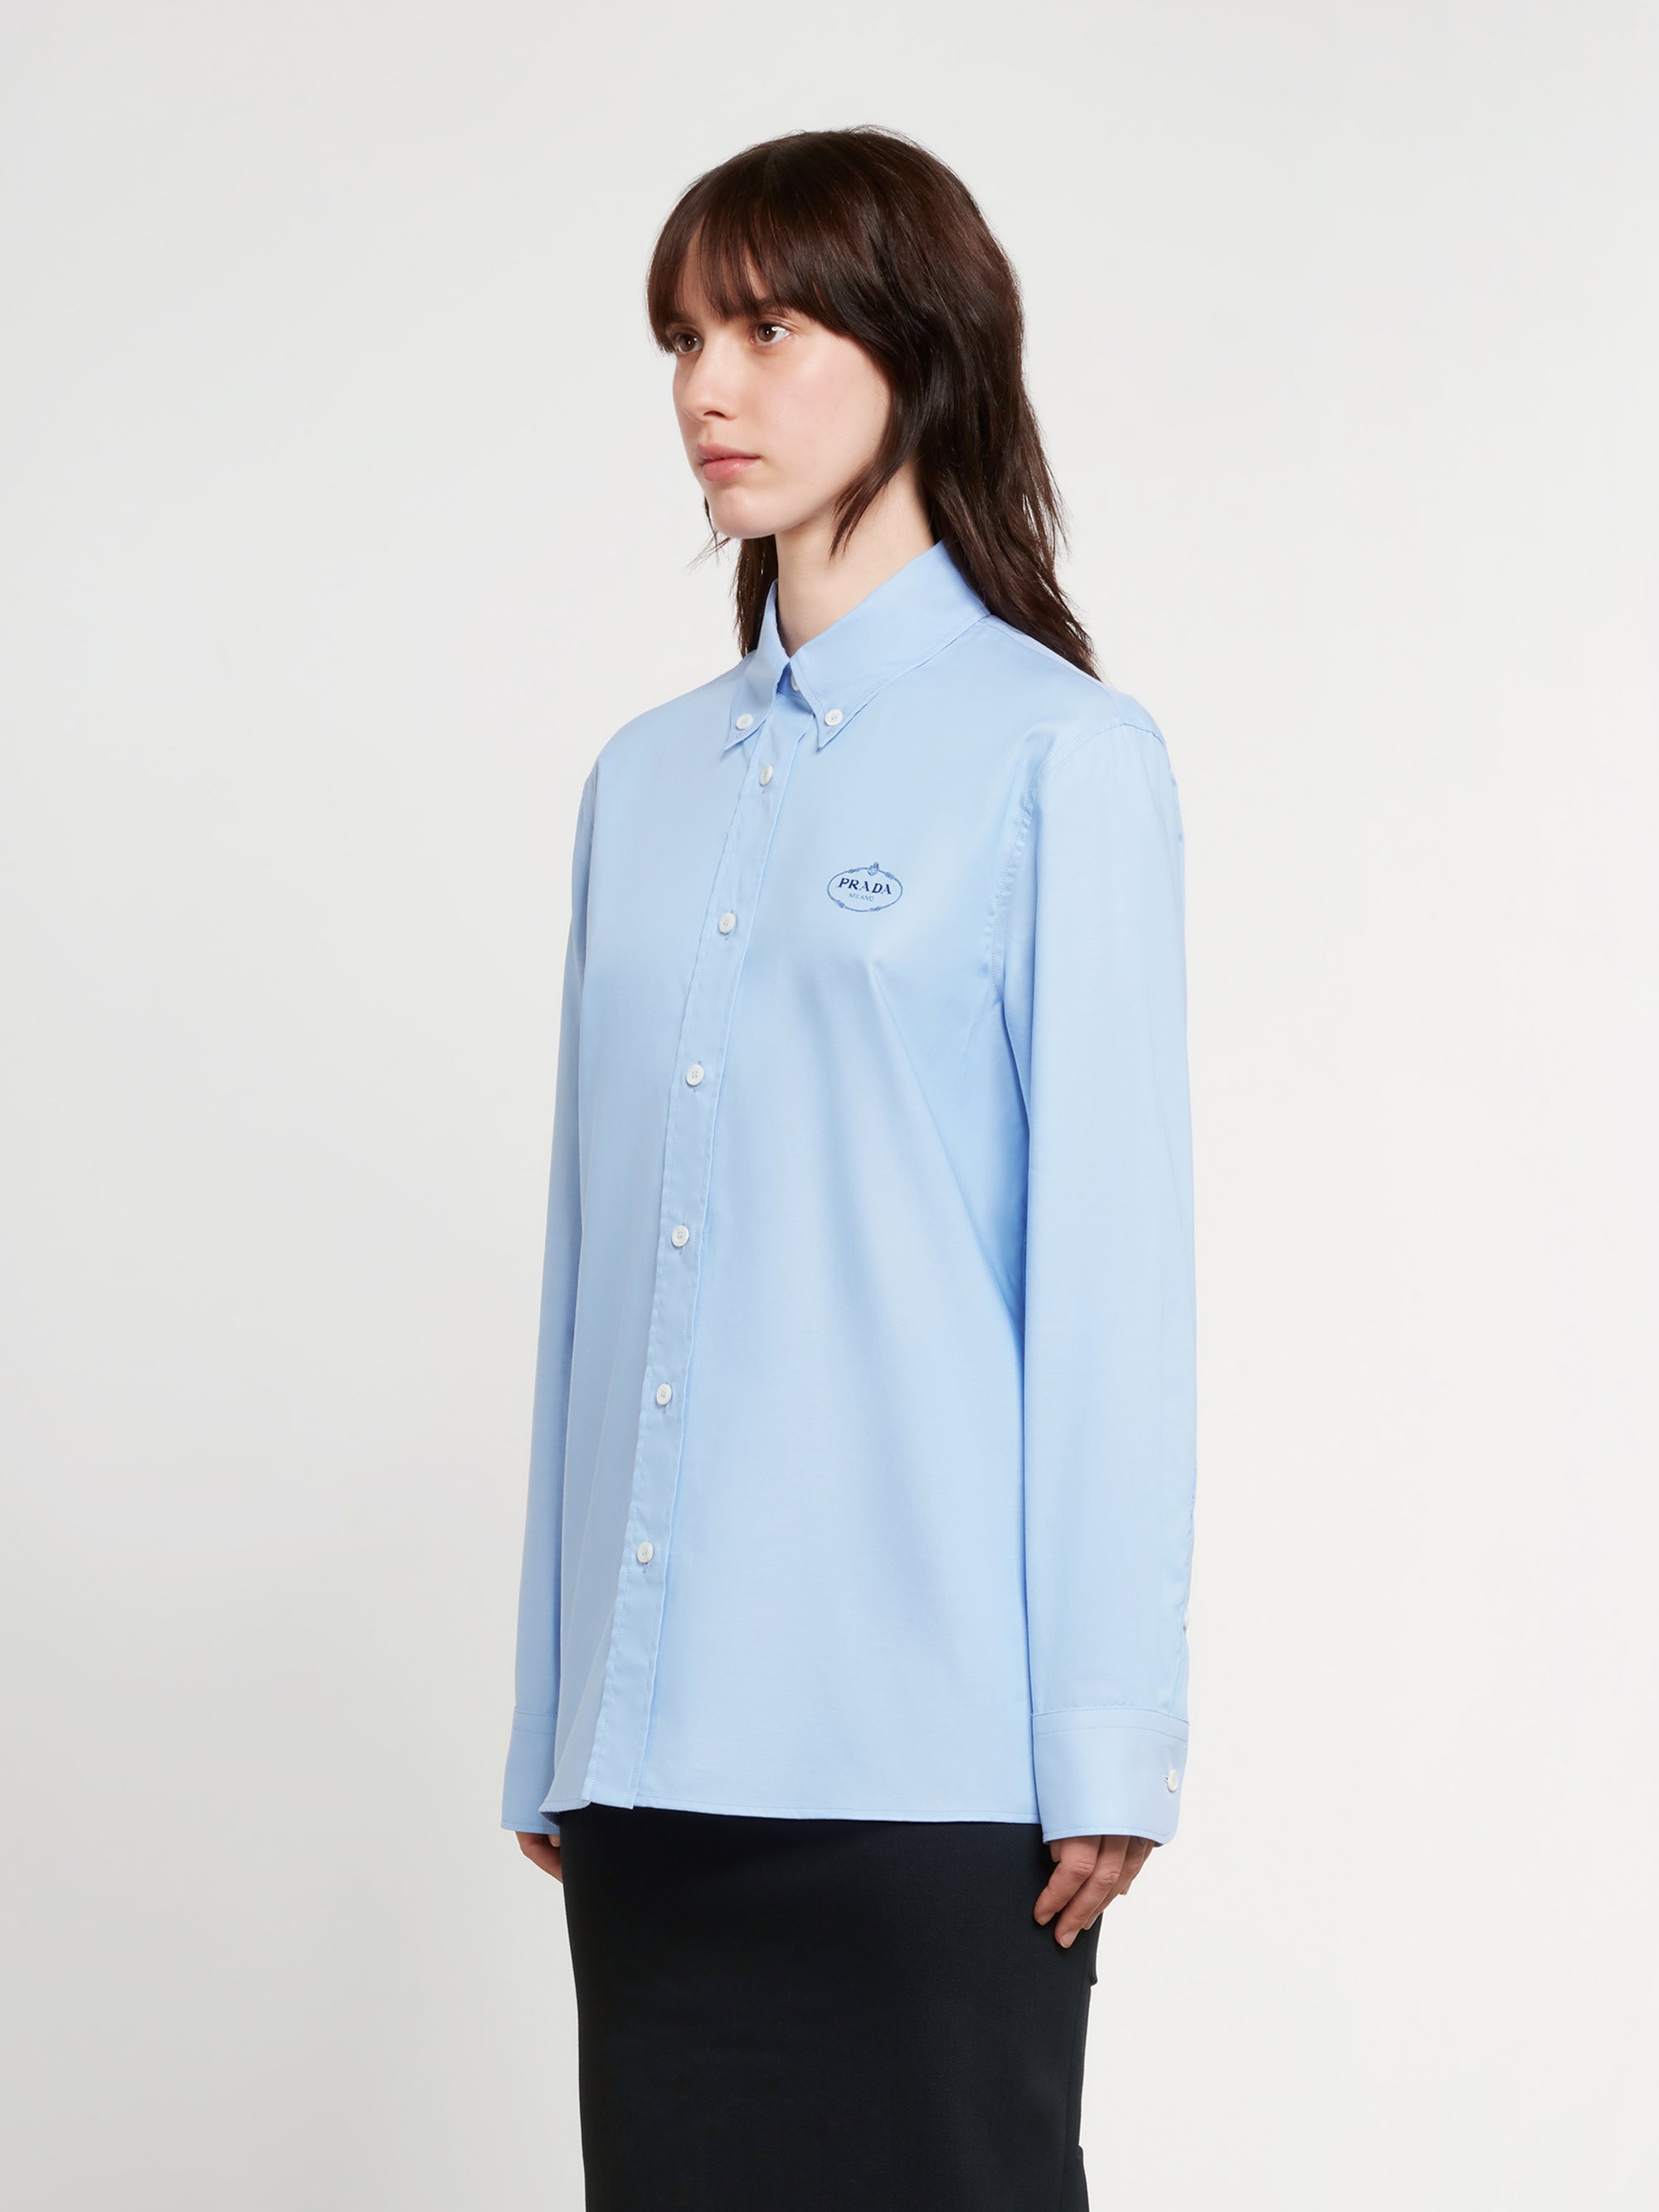 Prada - Women’s Oxford Cotton Shirt - (Light Blue) view 2